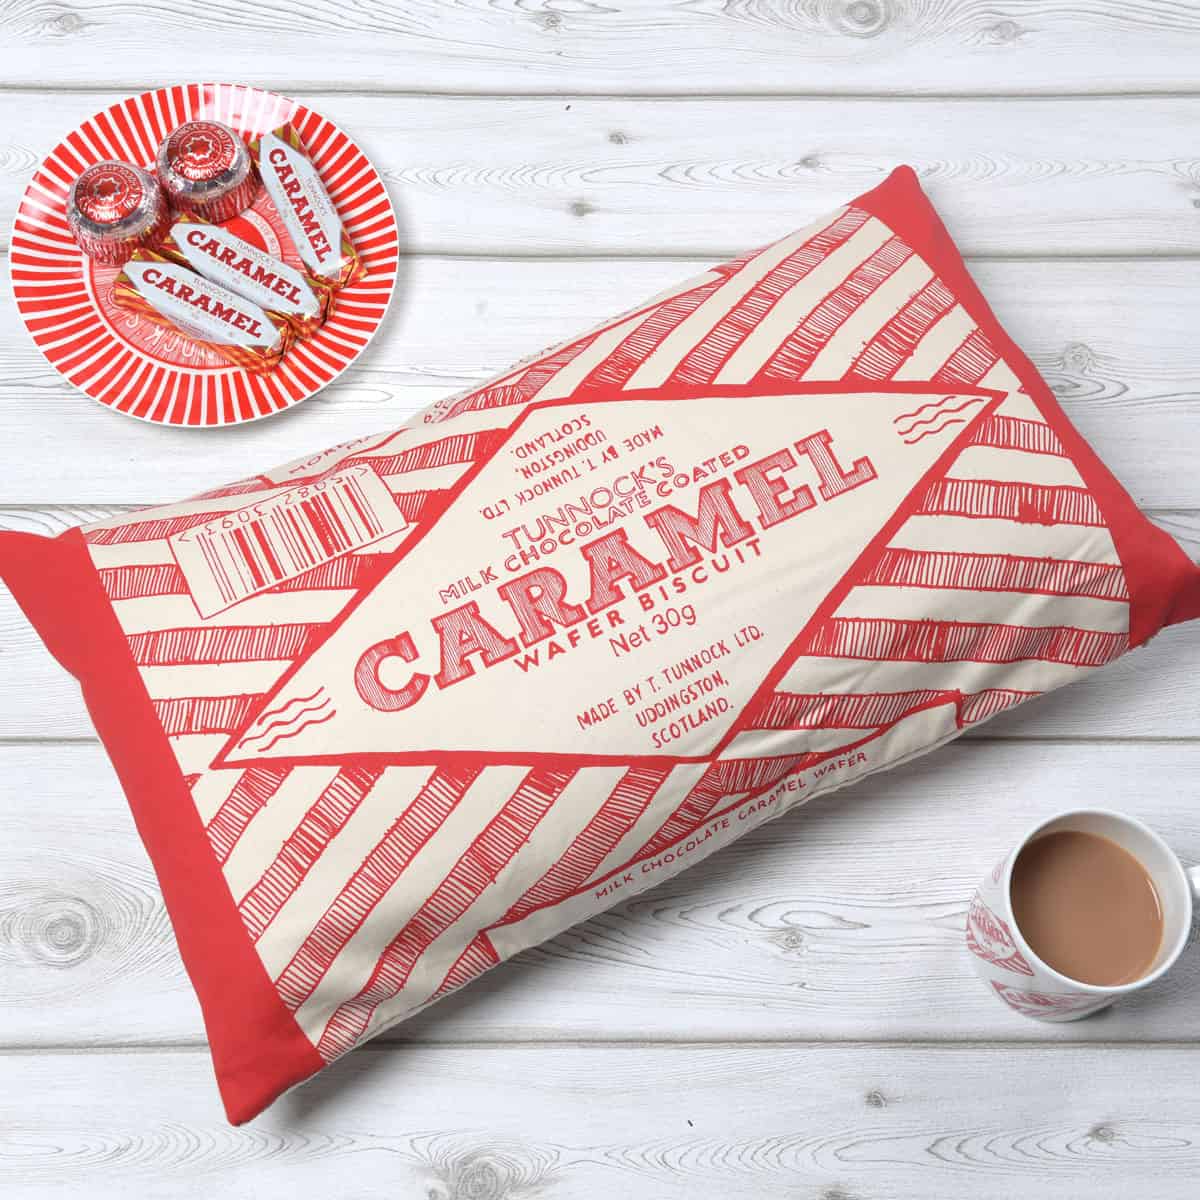 tunnocks-caramel-wrapper-cushion